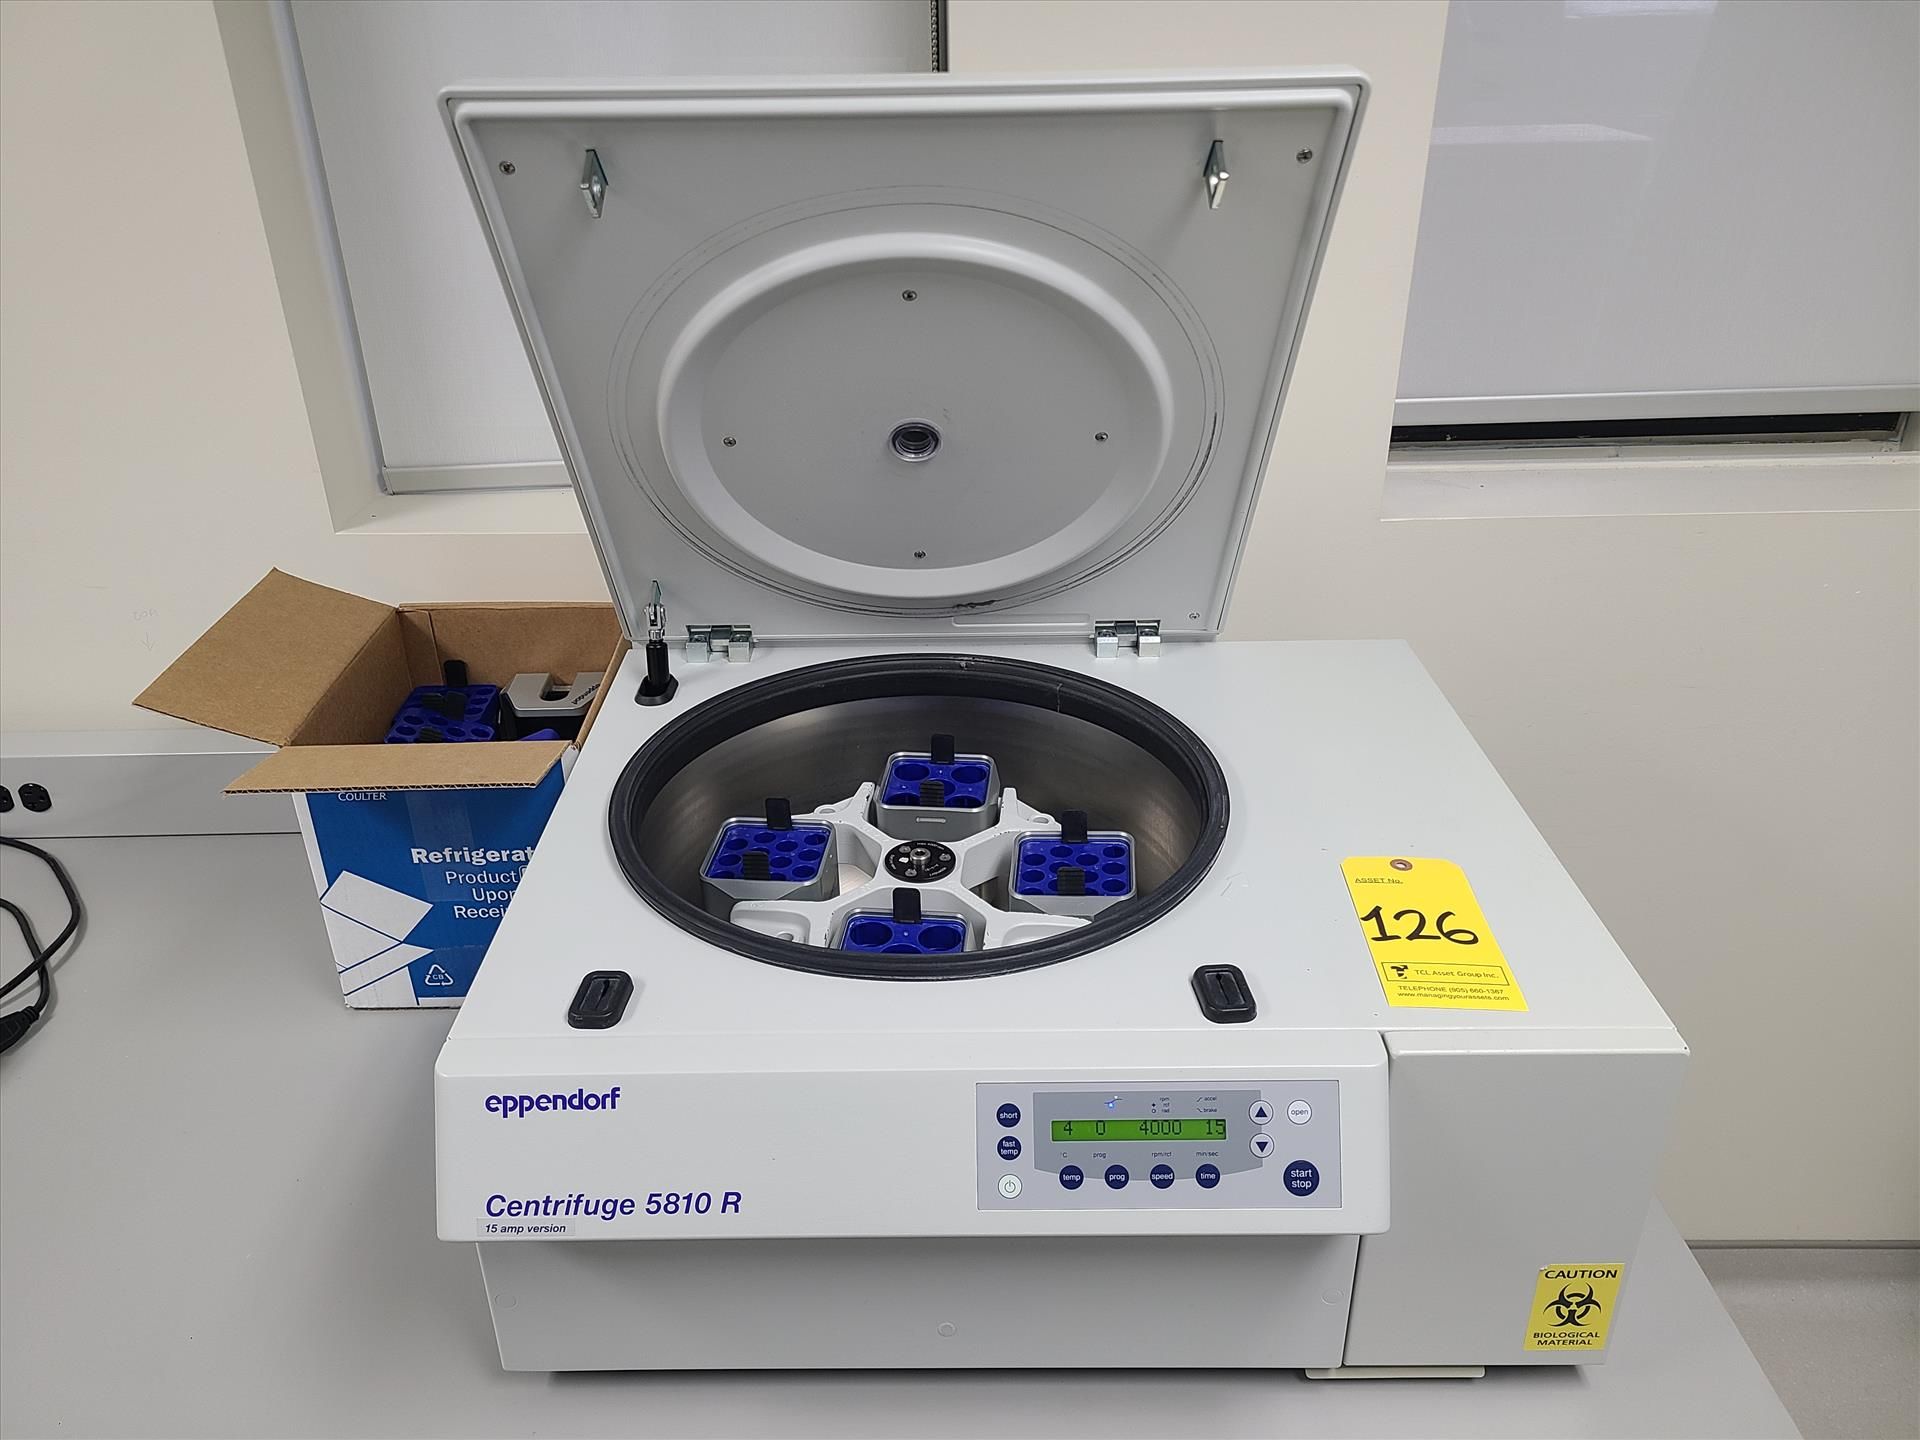 Eppendorf benchtop centrifuge, mod. 5810R, ser. no. 5811DO973808, 15 amp c/w 2 plates, 4 buckets,